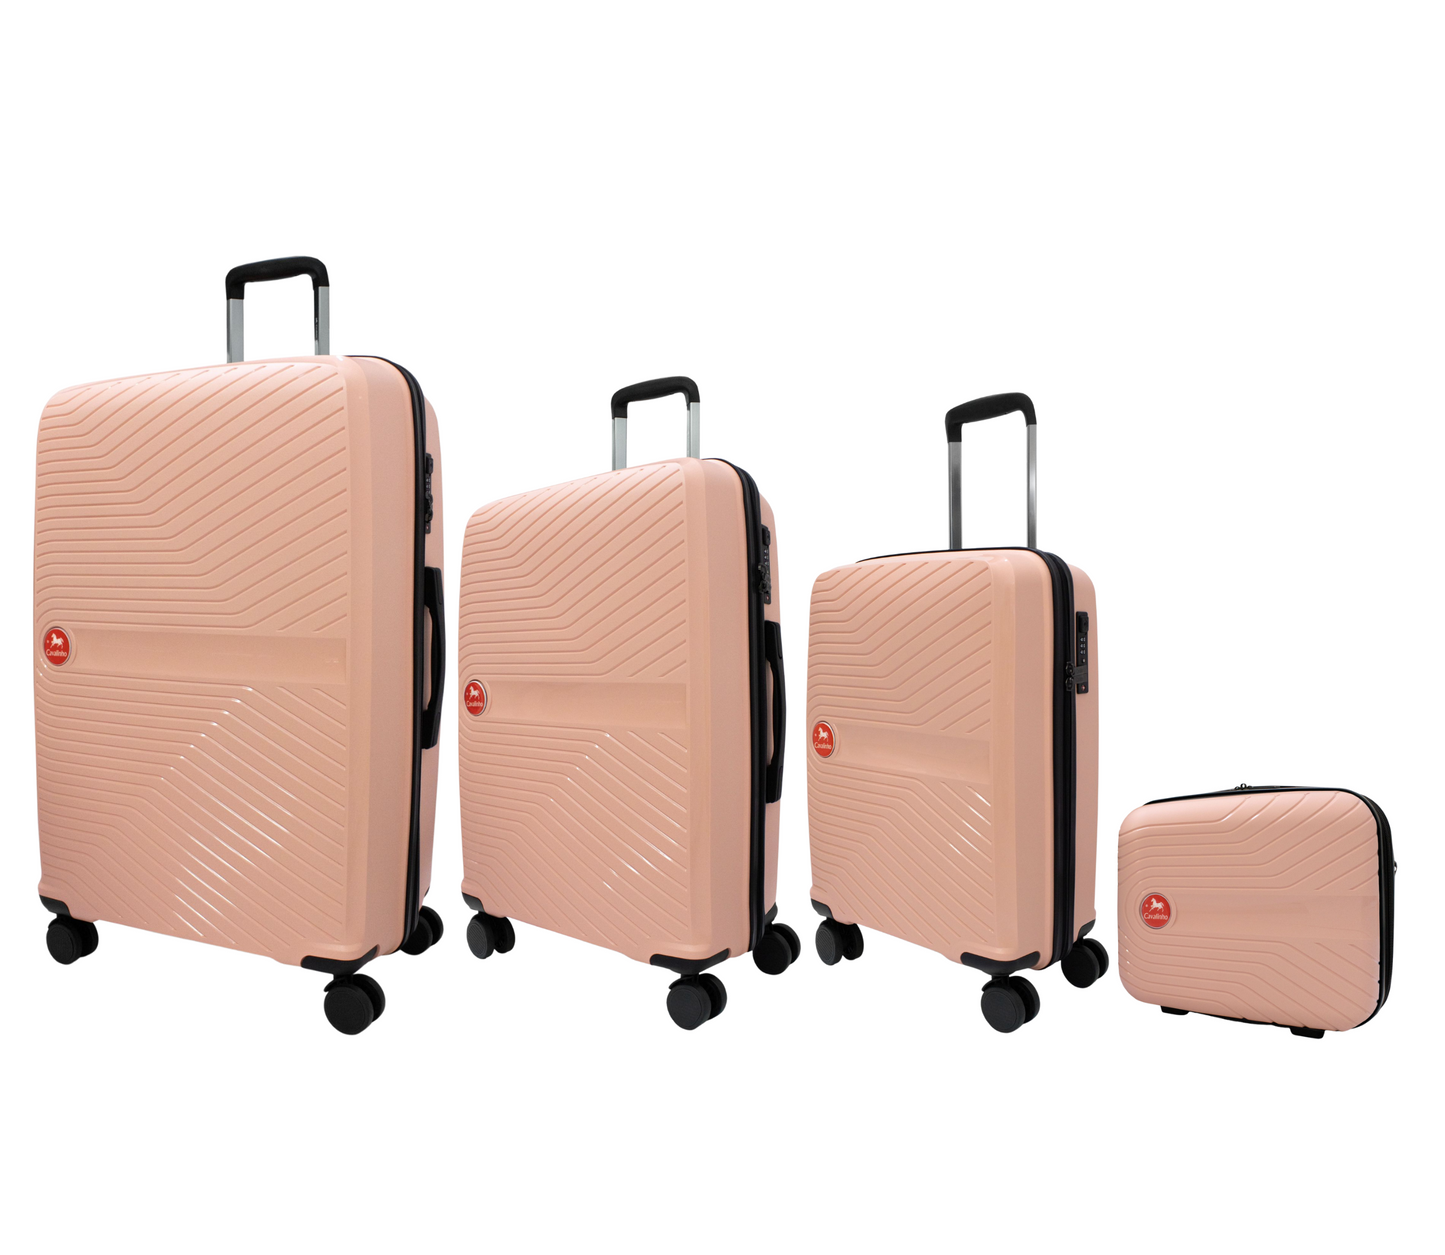 #color_ Salmon | Cavalinho Canada & USA 4 Piece Set of Colorful Hardside Luggage (15", 19", 24", 28") - Salmon - 68020004.11.S4_2